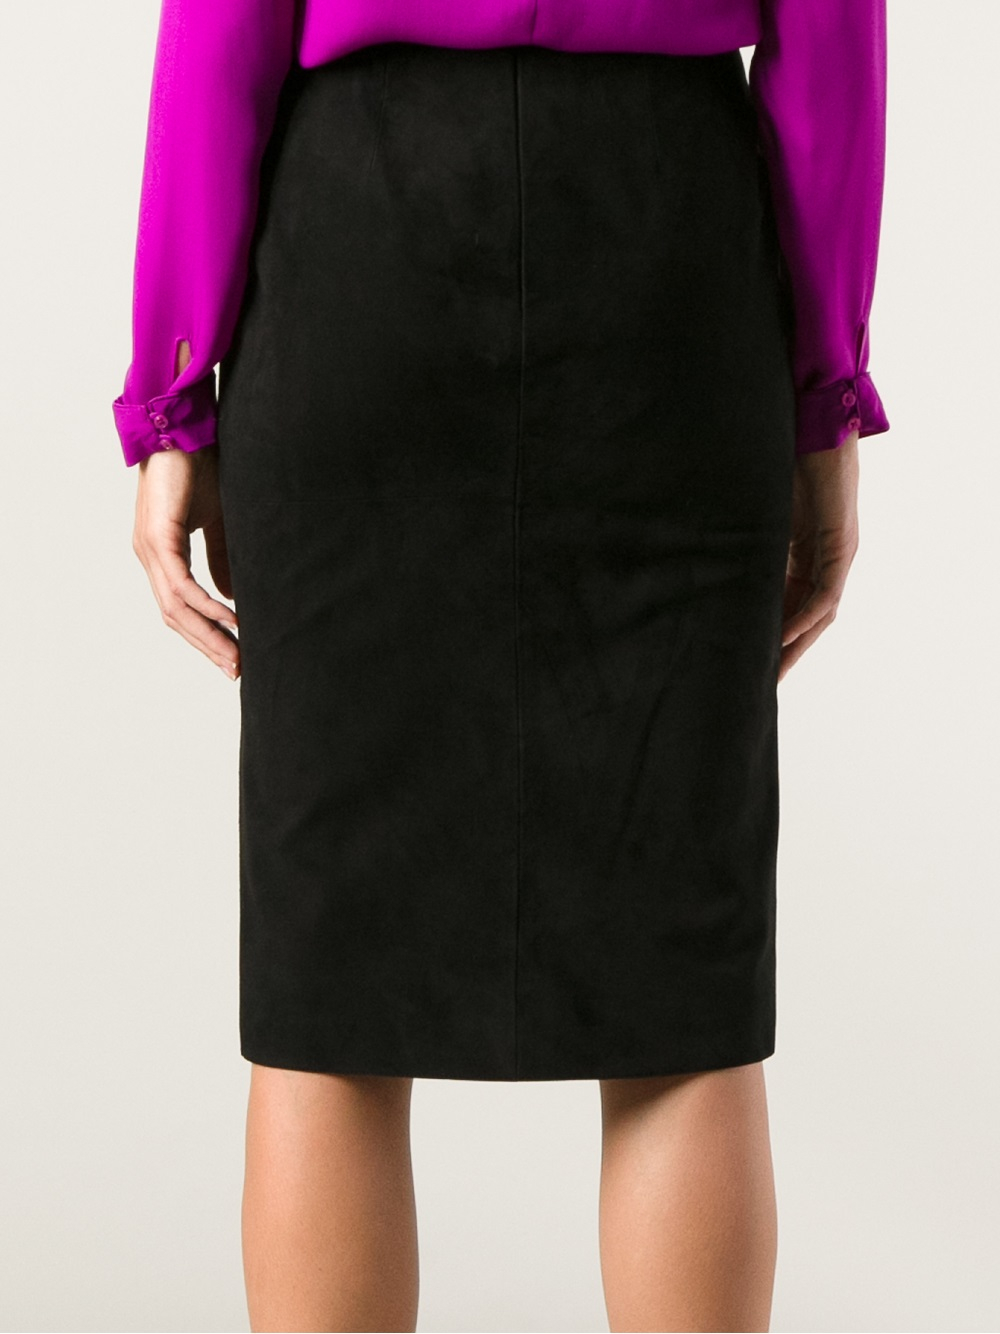 Lyst - Tom Ford Pencil Skirt in Black